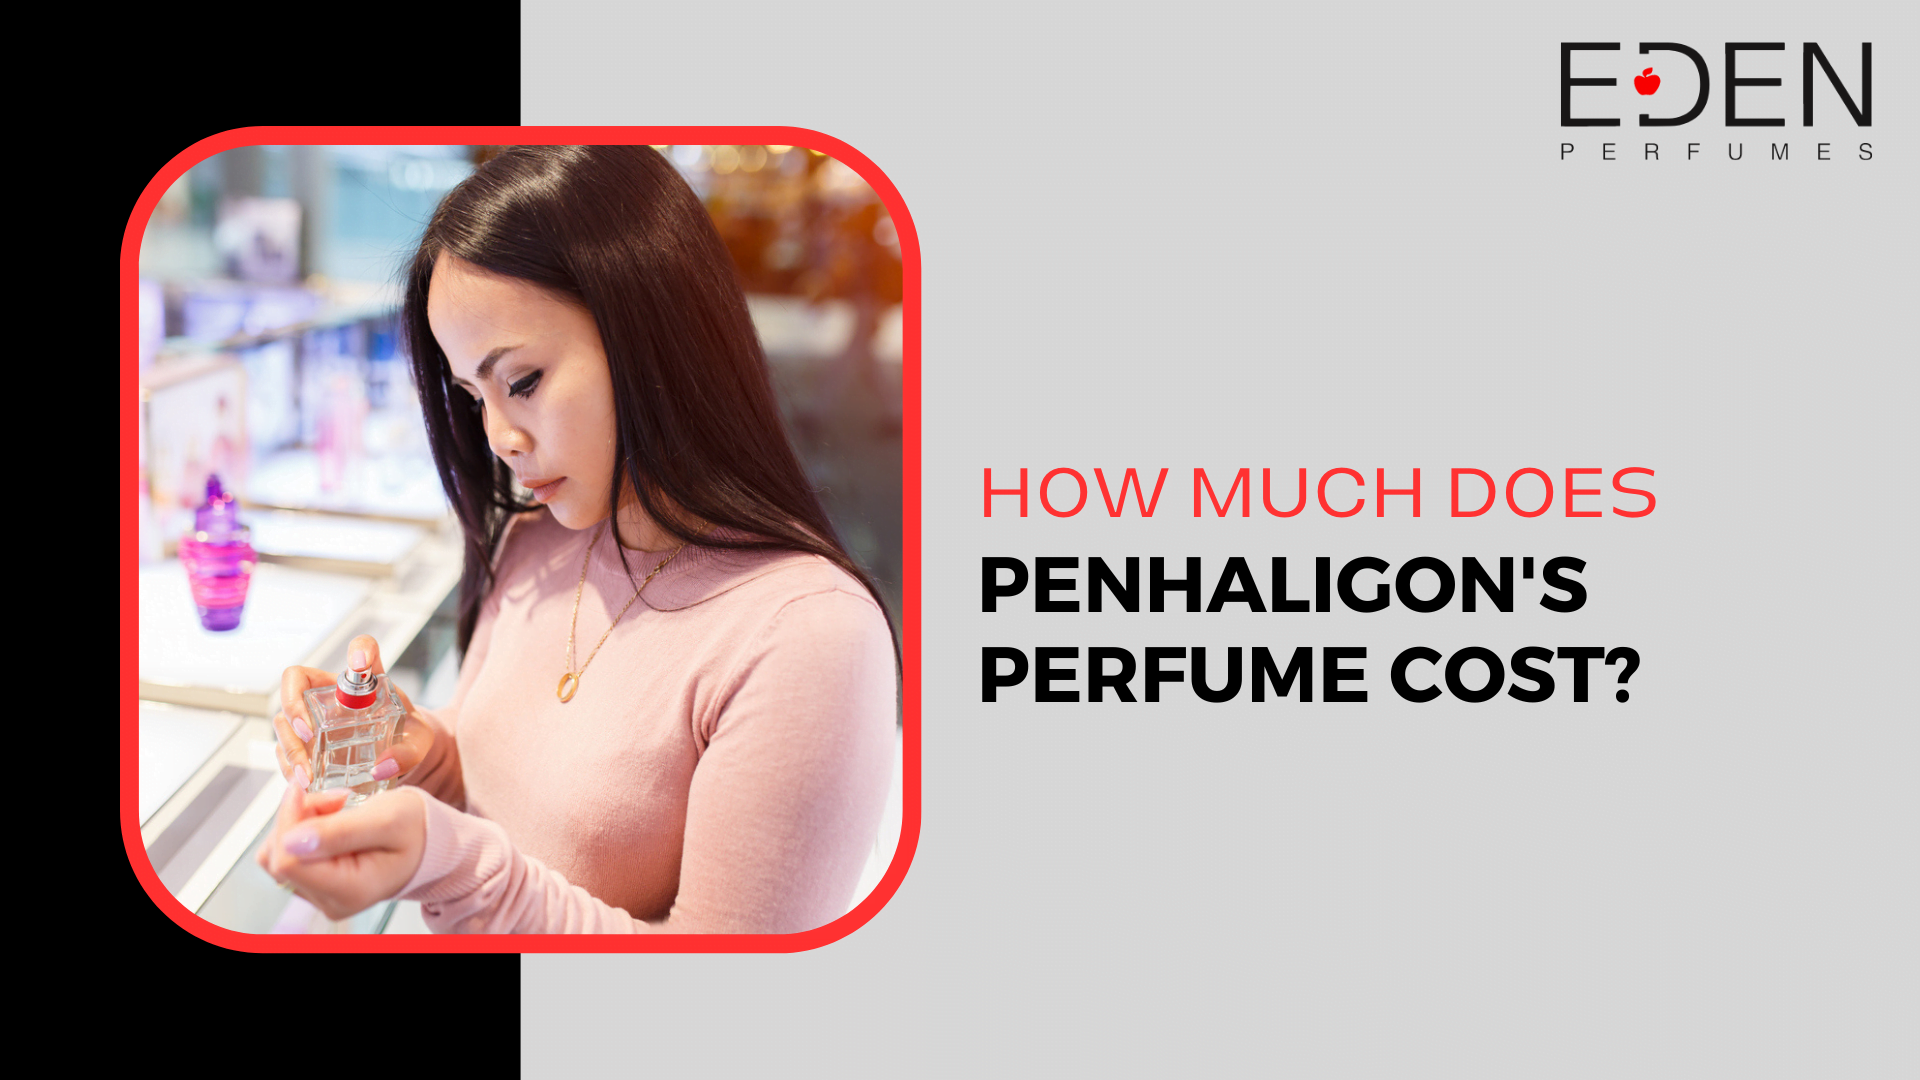 How much does Penhaligon’s perfume cost?